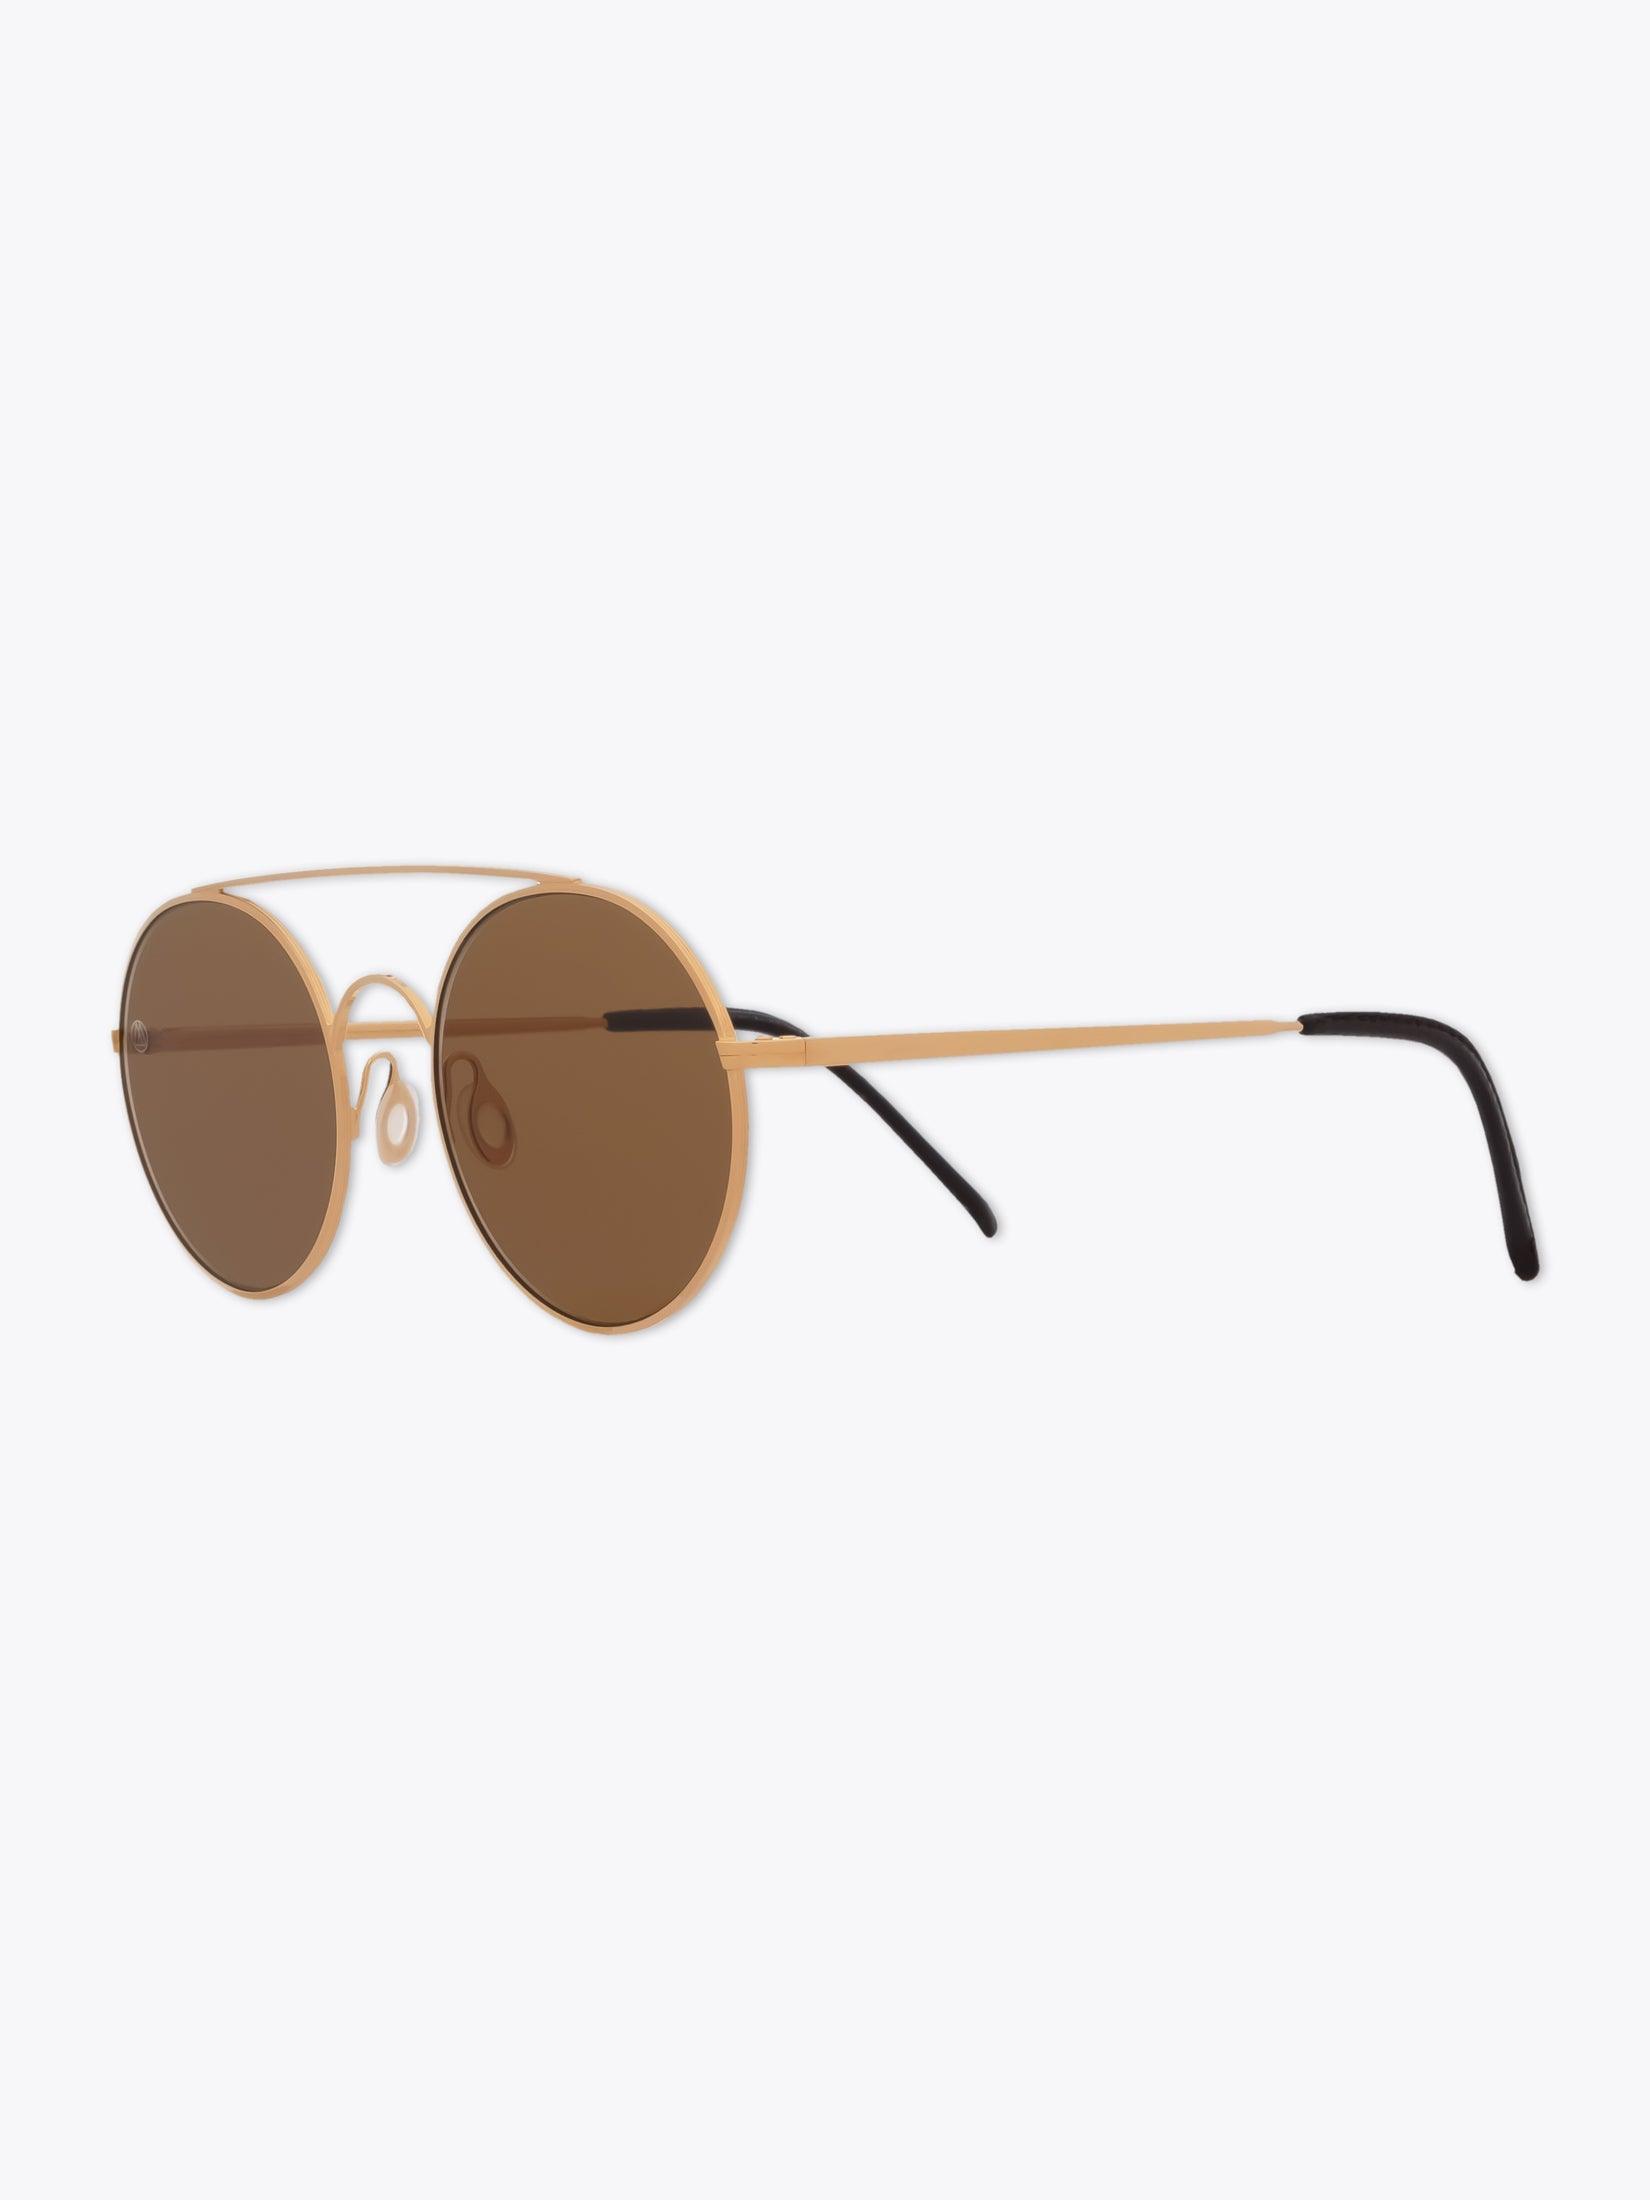 8000 Eyewear 8M6 14K Gold-Plated Round Sunglasses